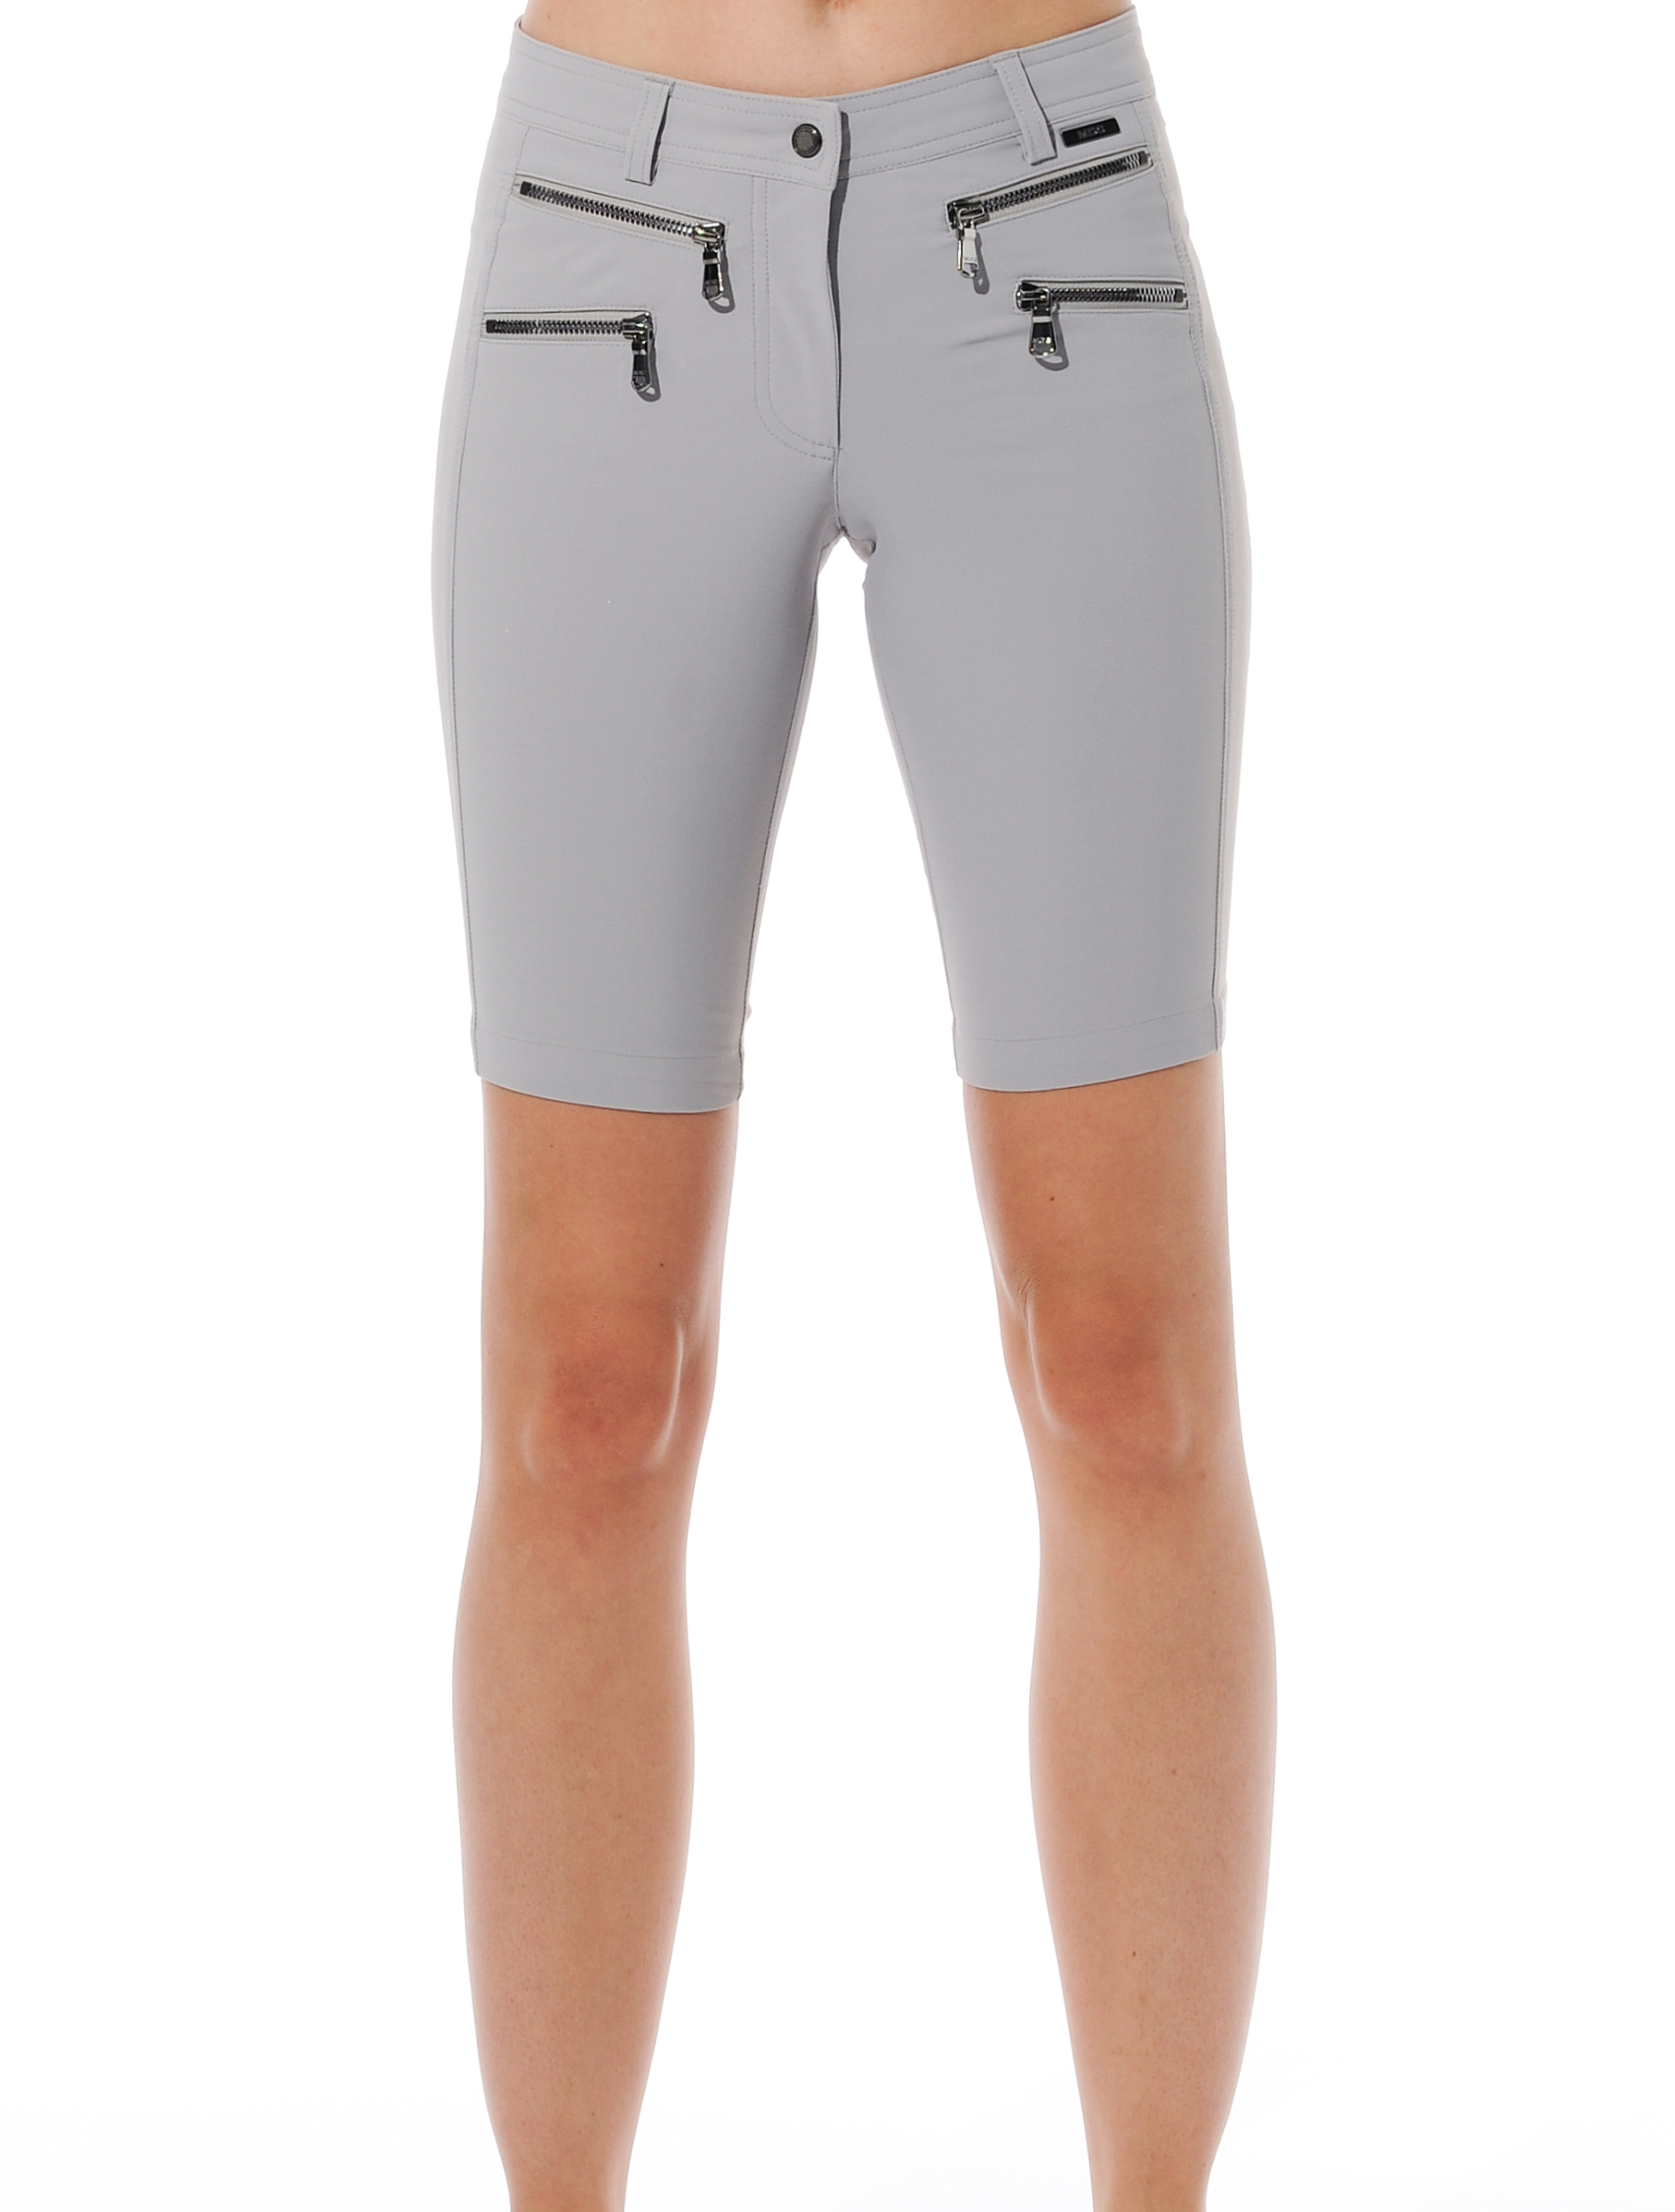 4way stretch double zip shorts grey 